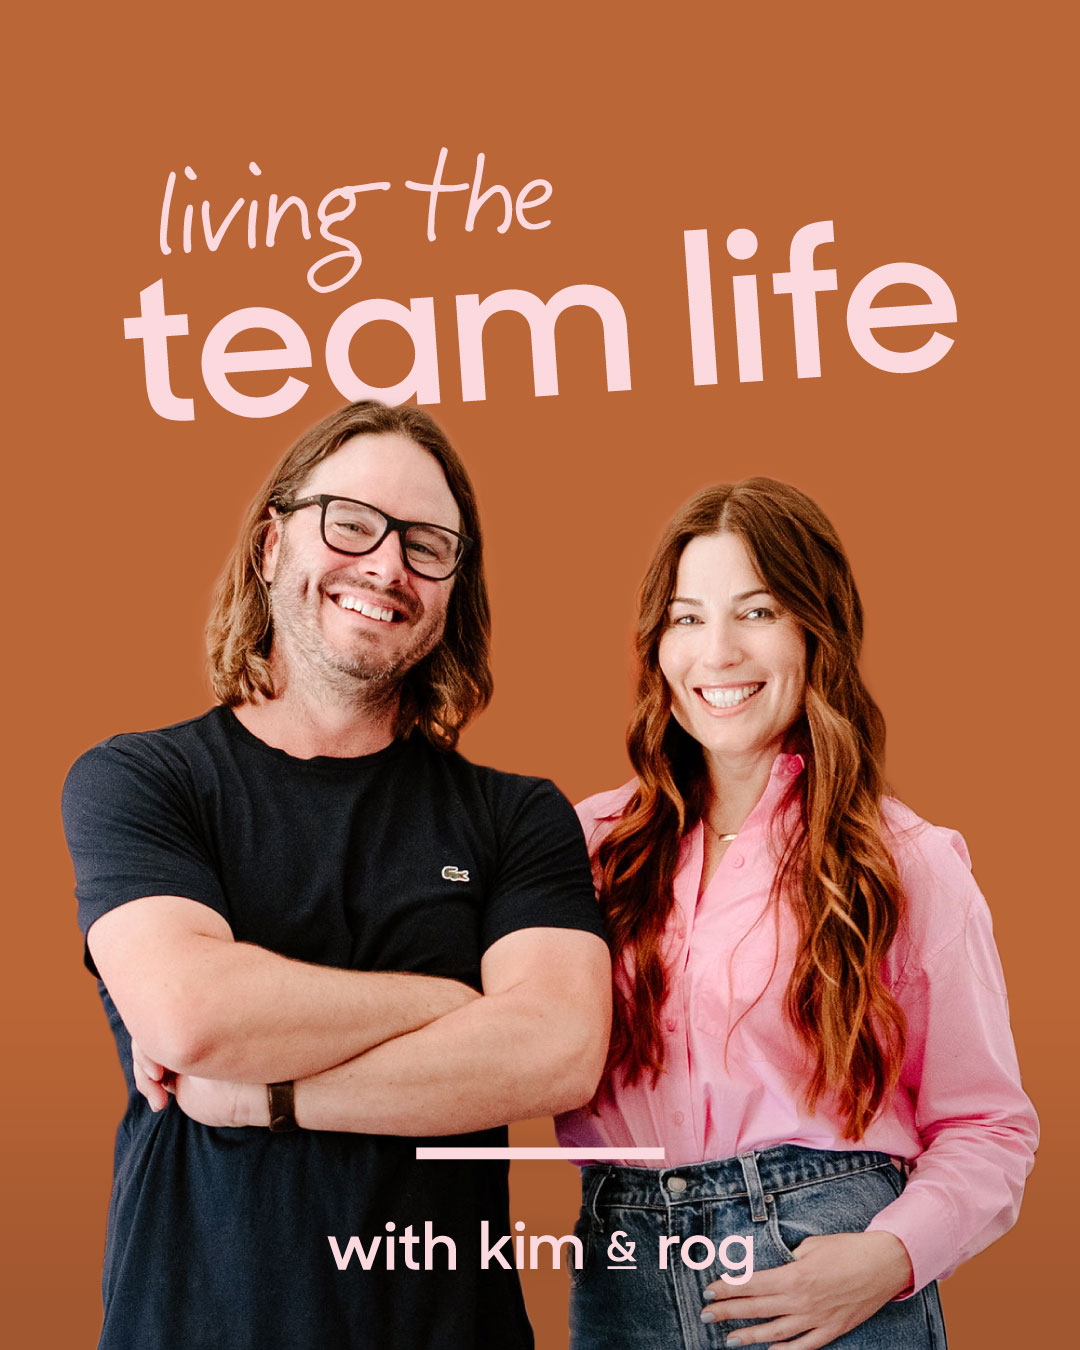 Kim & Rog: Living the team life